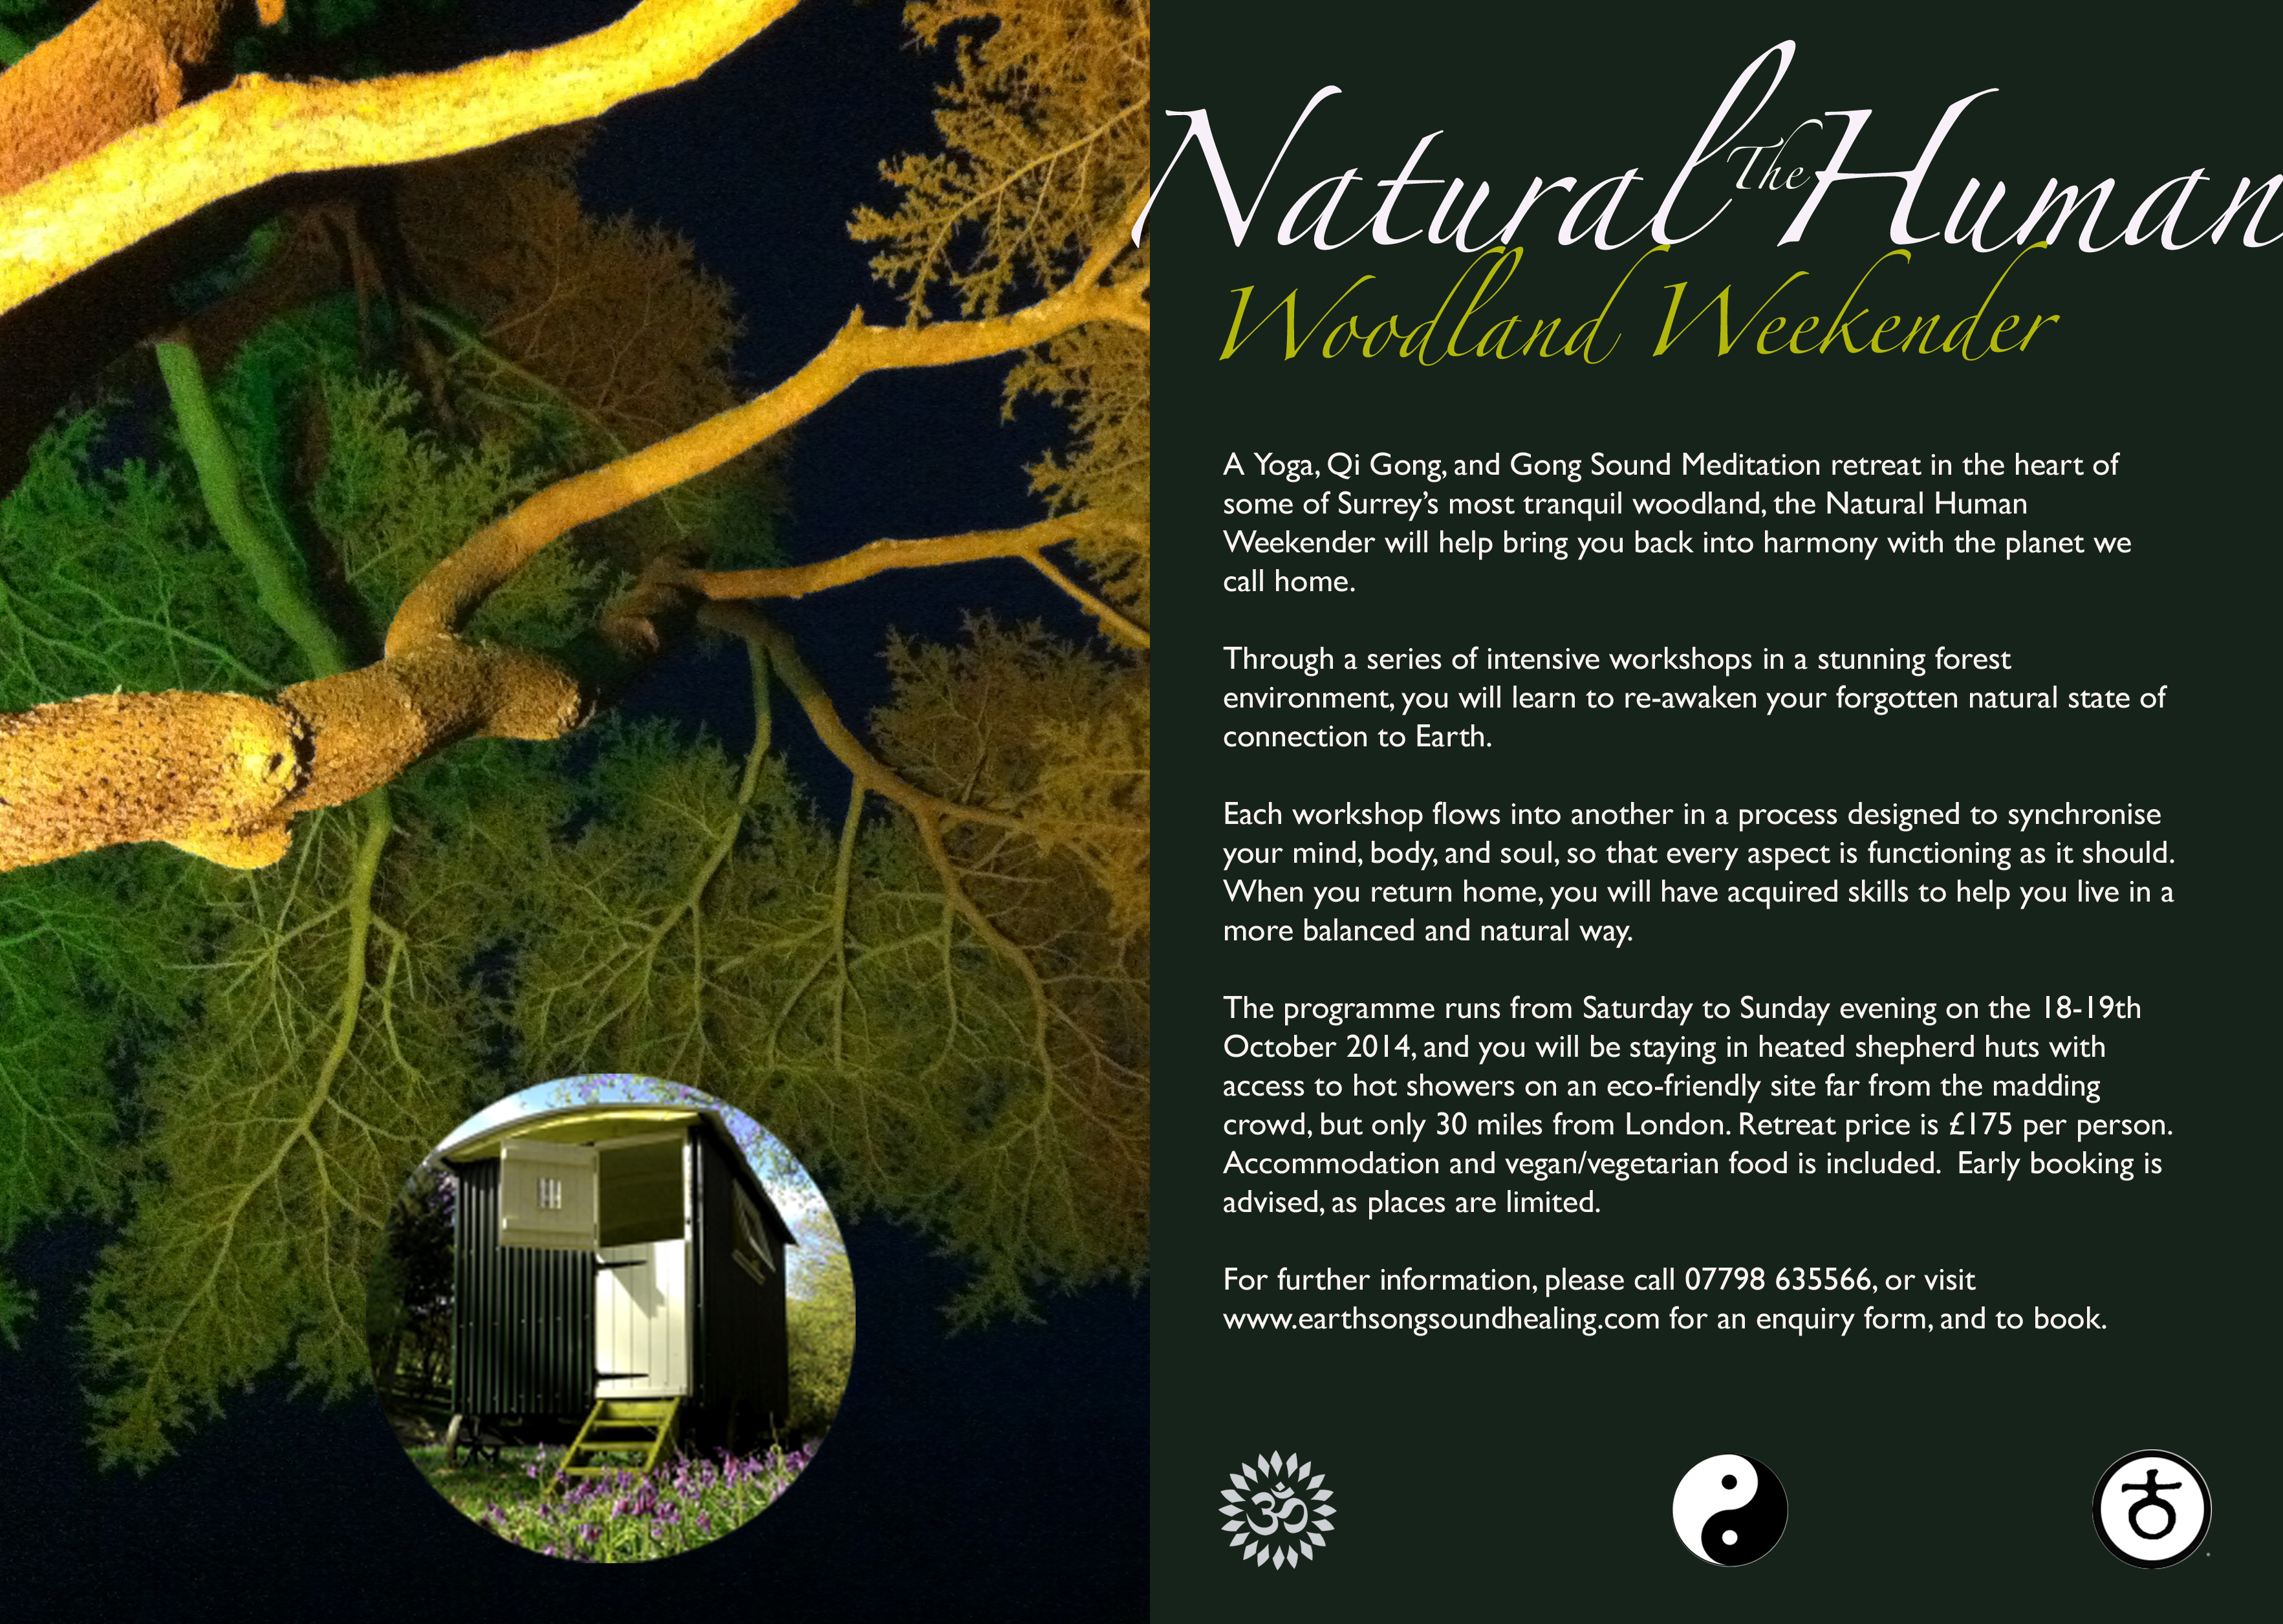 SURREY - The Natural Human Woodland Weekender